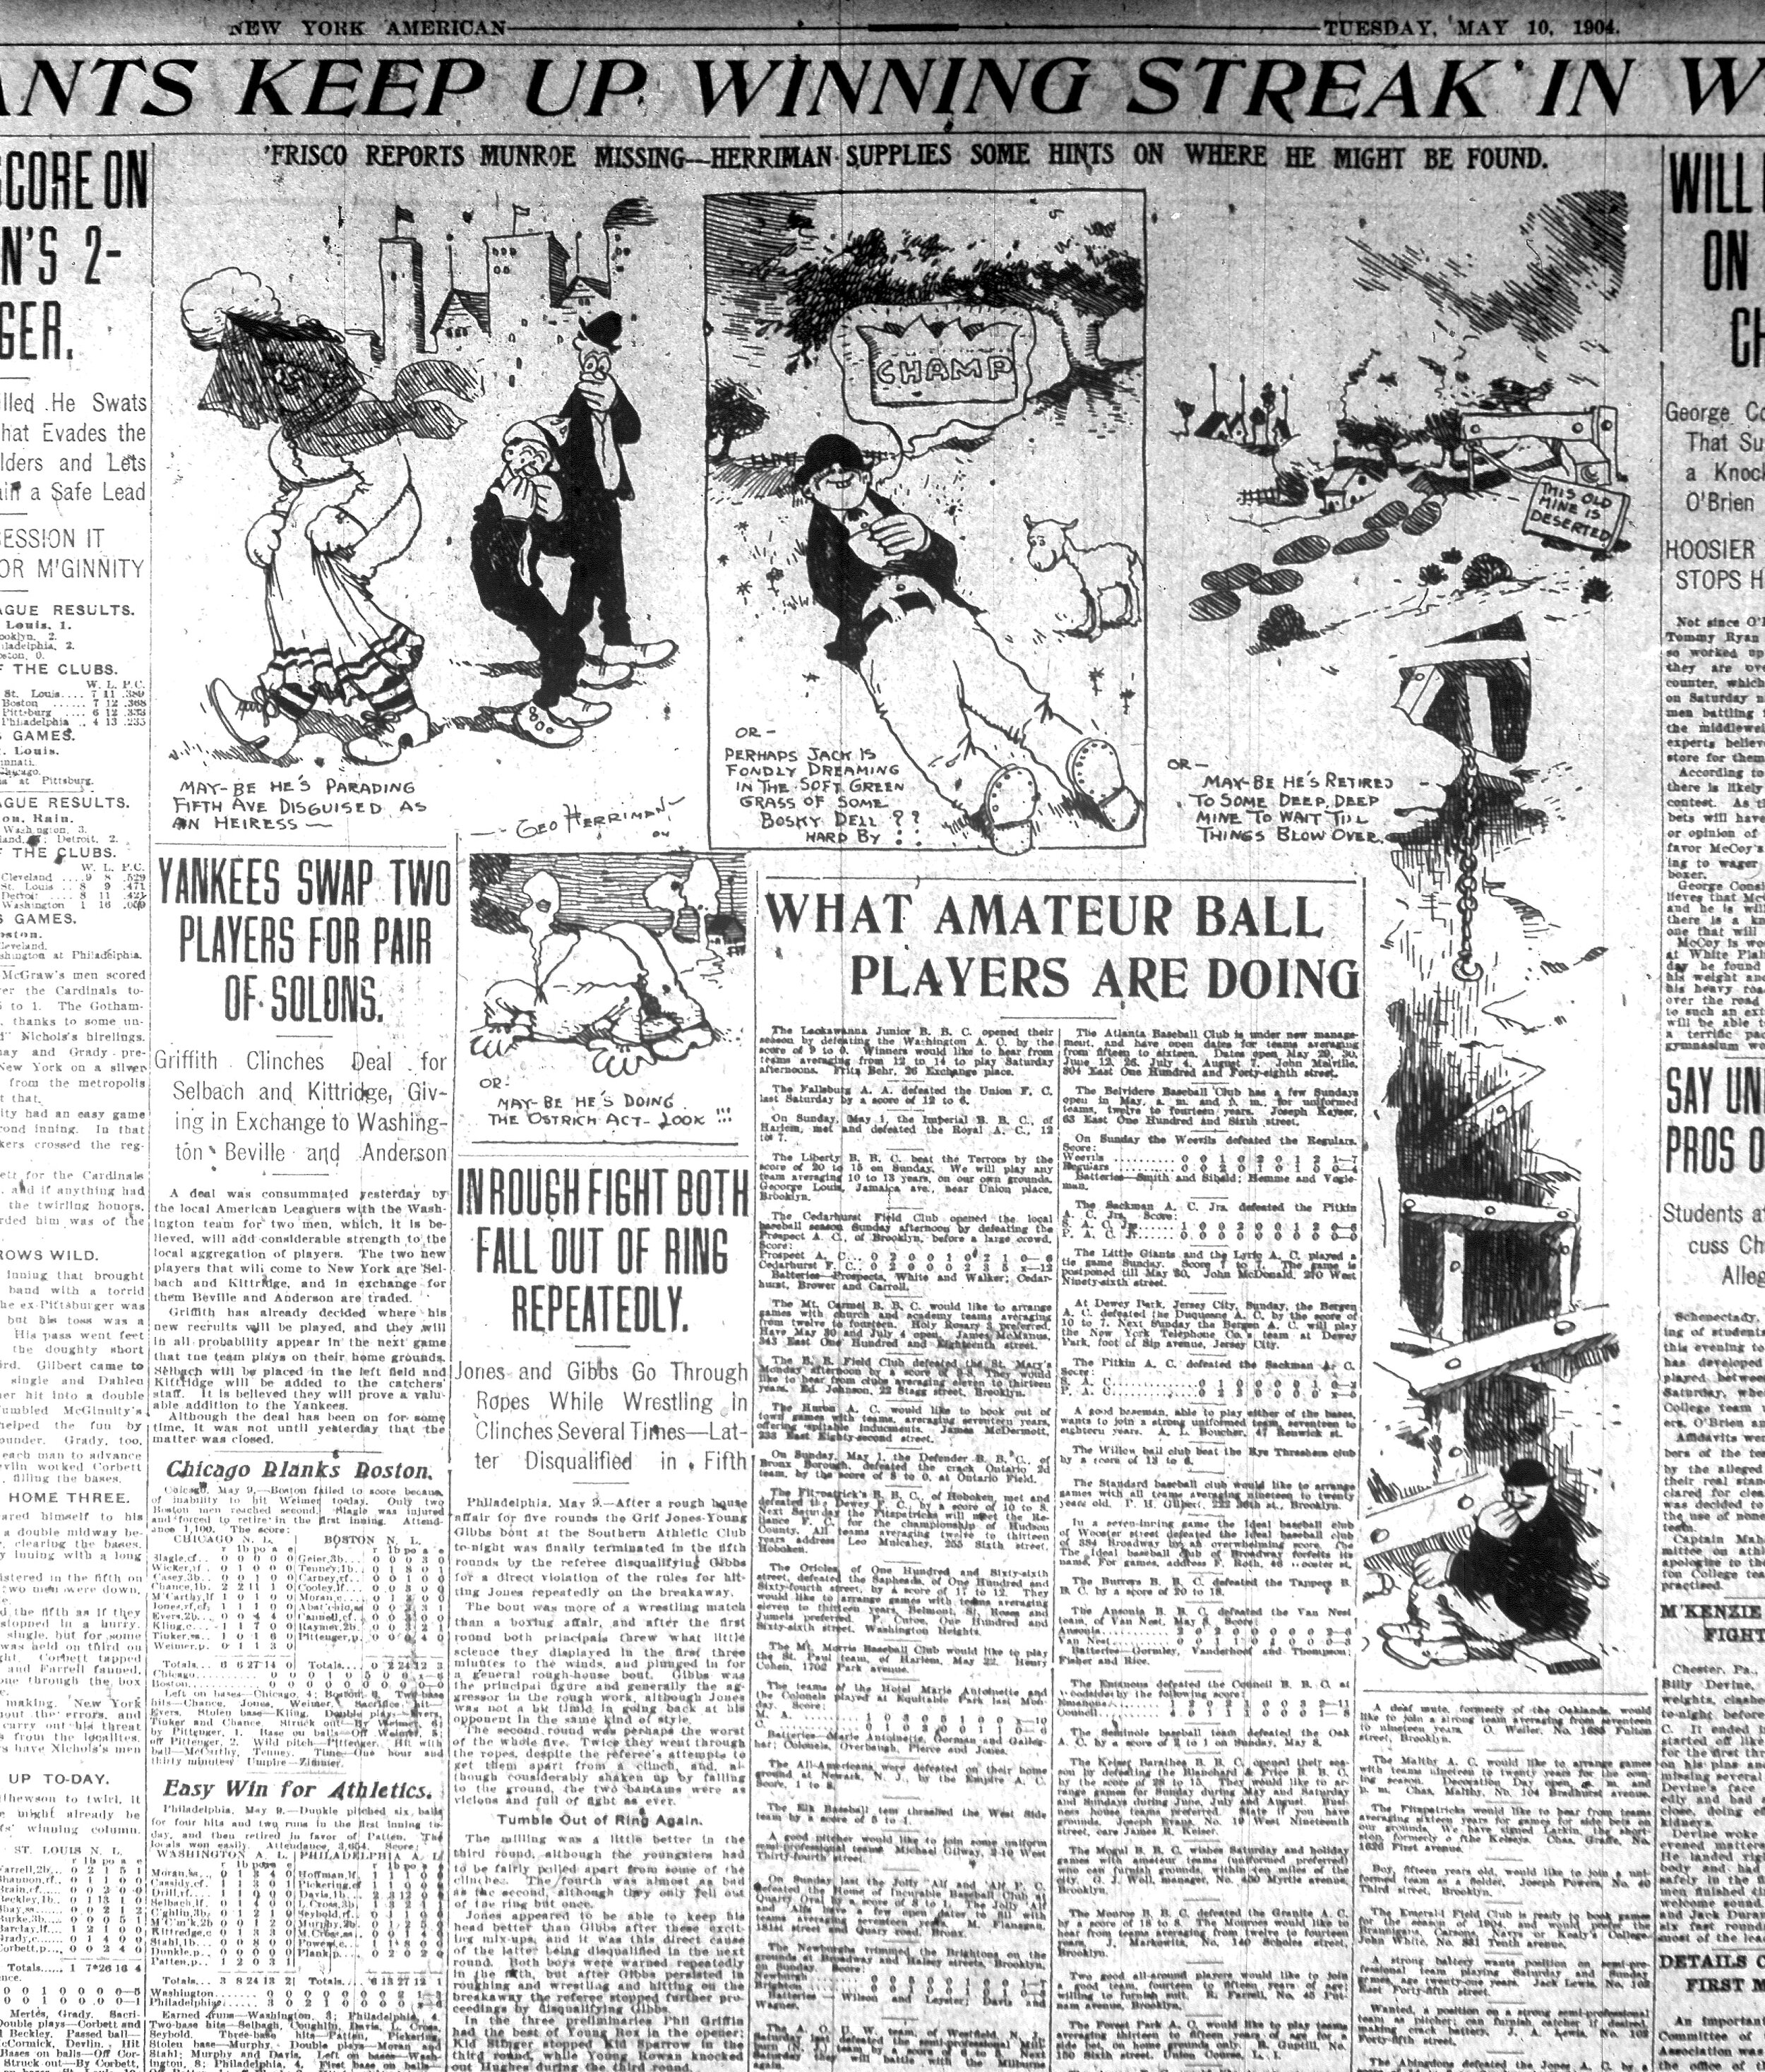 07-1904-05-10-nya-herriman-sports-cartoon.jpg